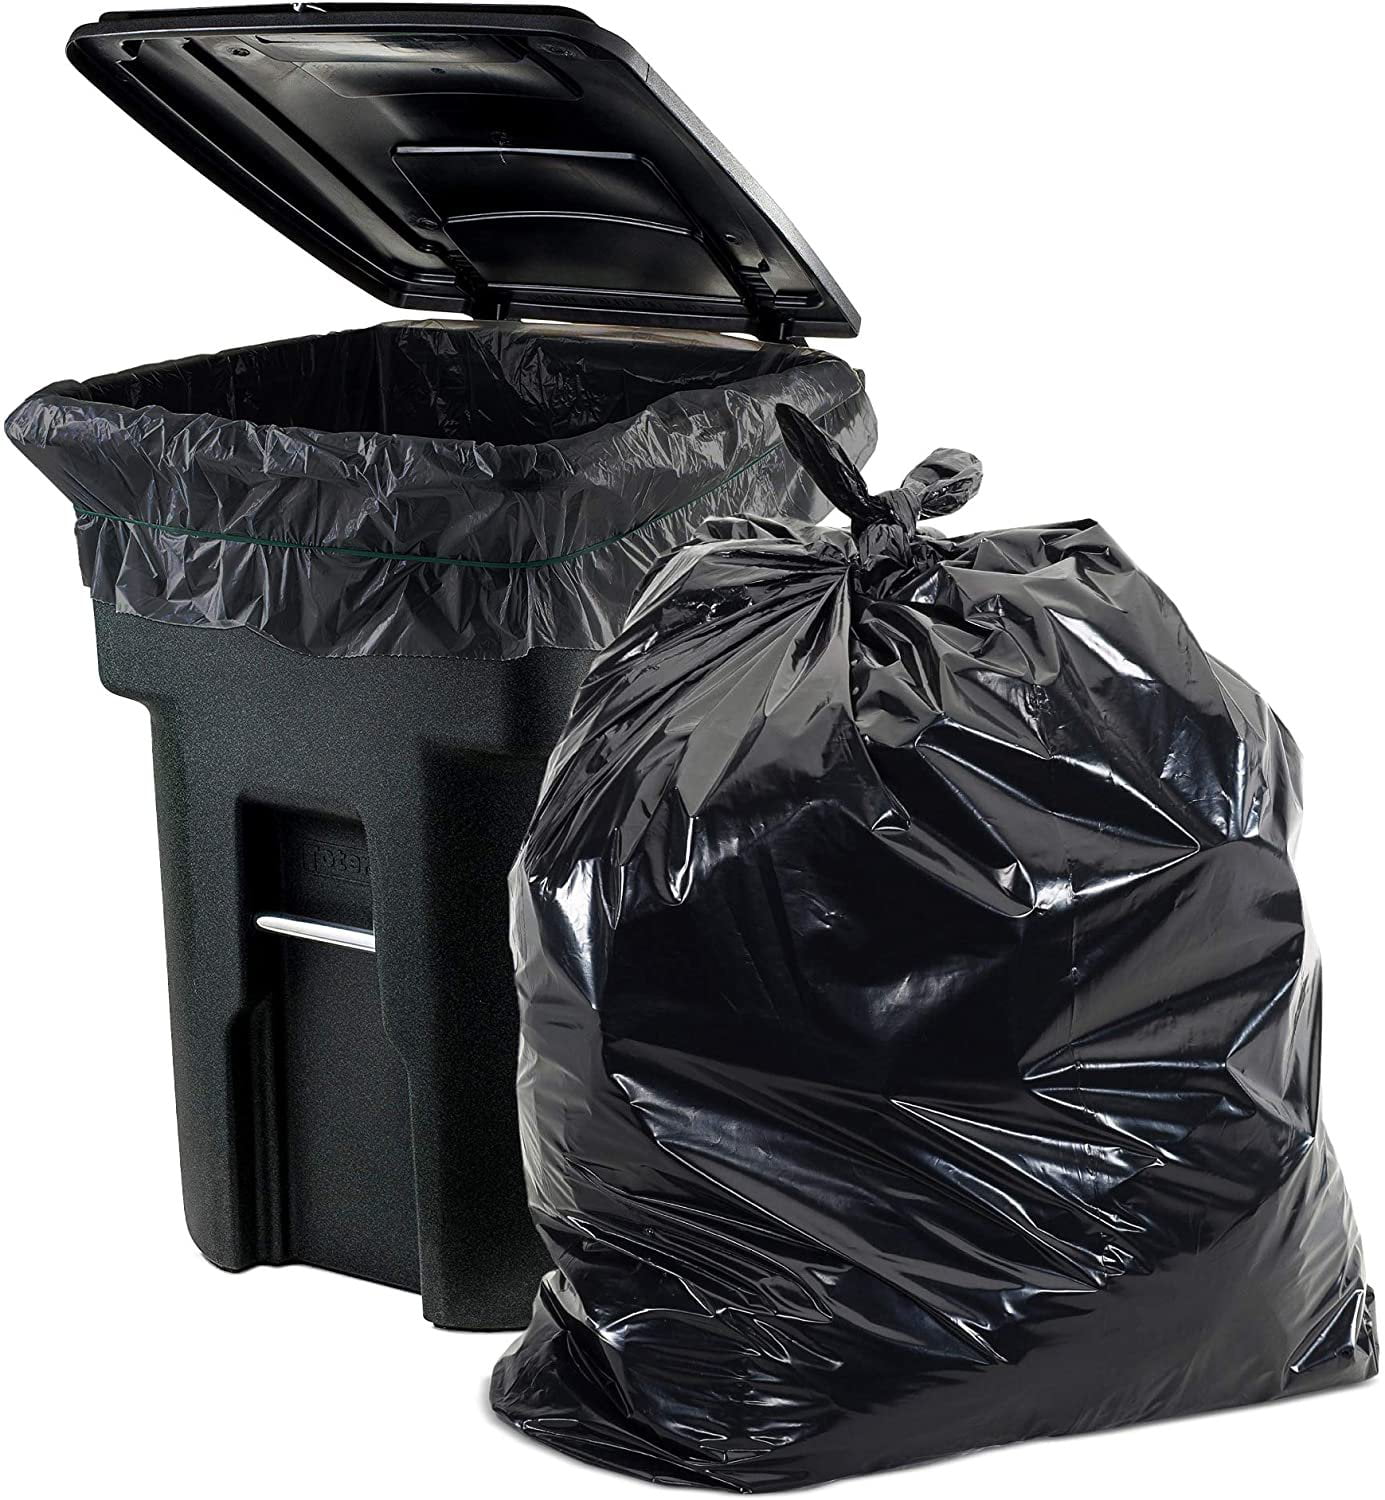 Sak-It™ 60 Gallon Clear High Density Coreless Trash Can Liners (38 x 60